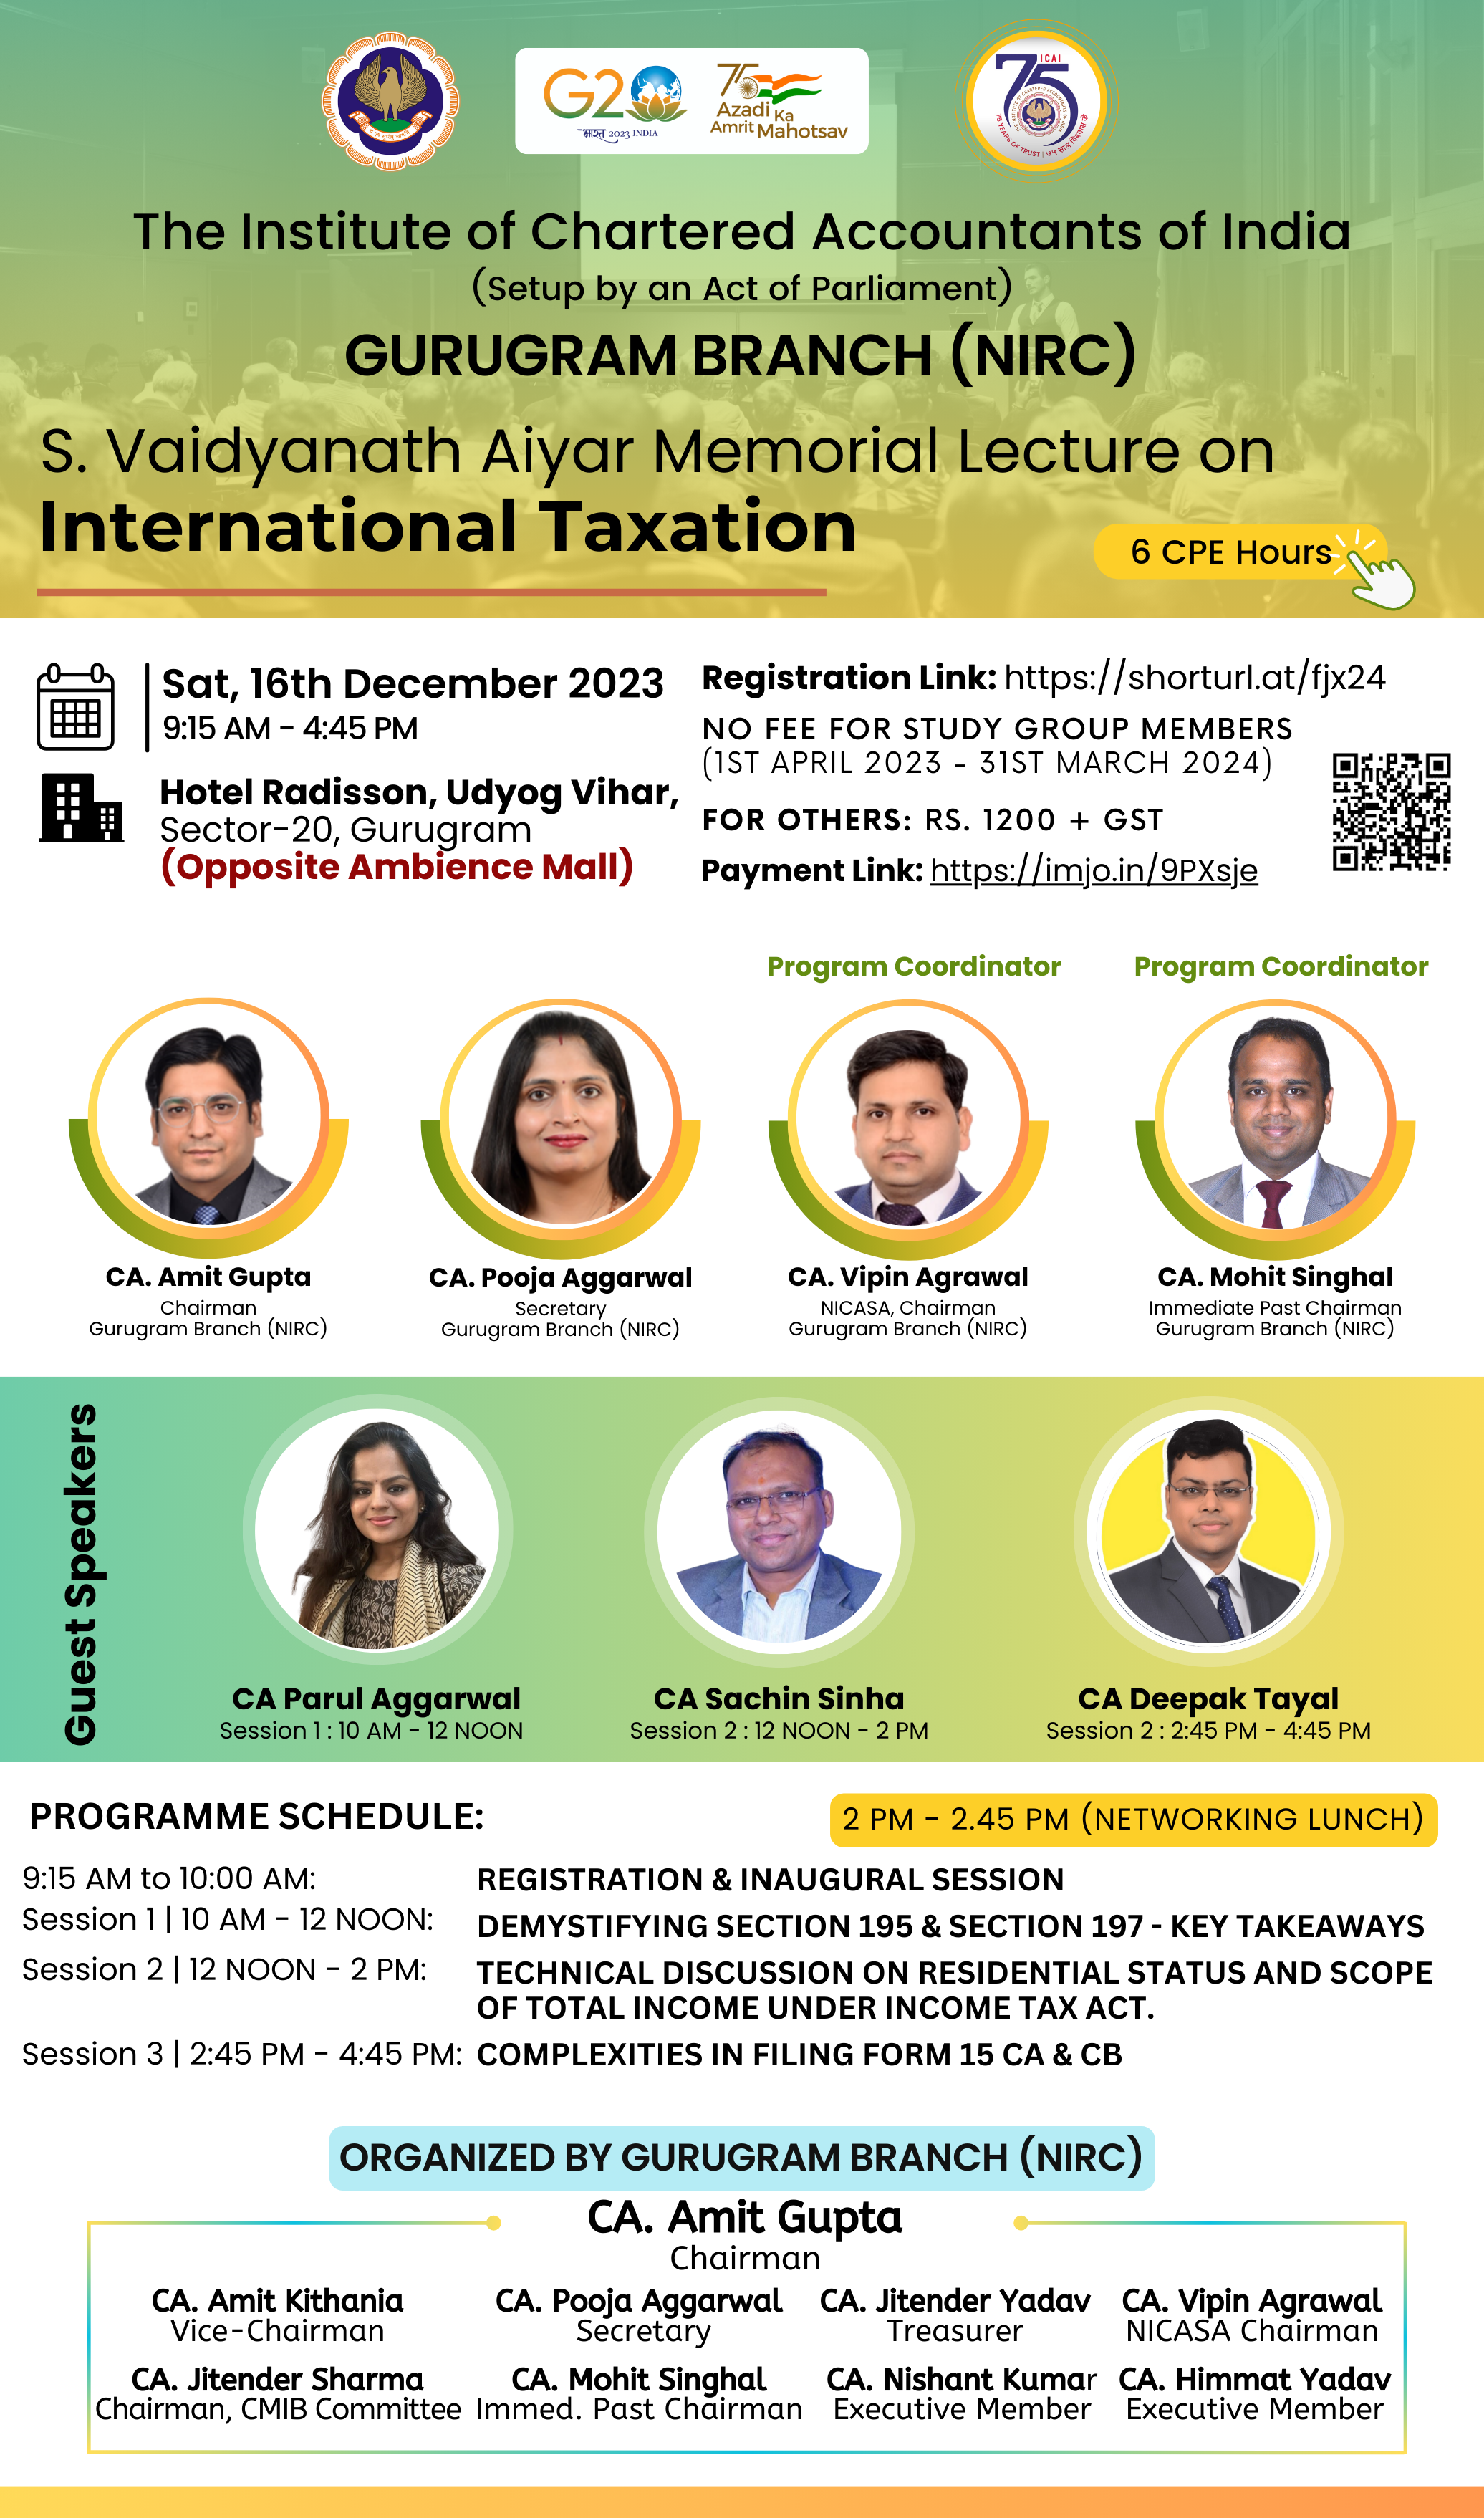 S. Vaidyanath Aiyar Memorial Lecture on International Taxation